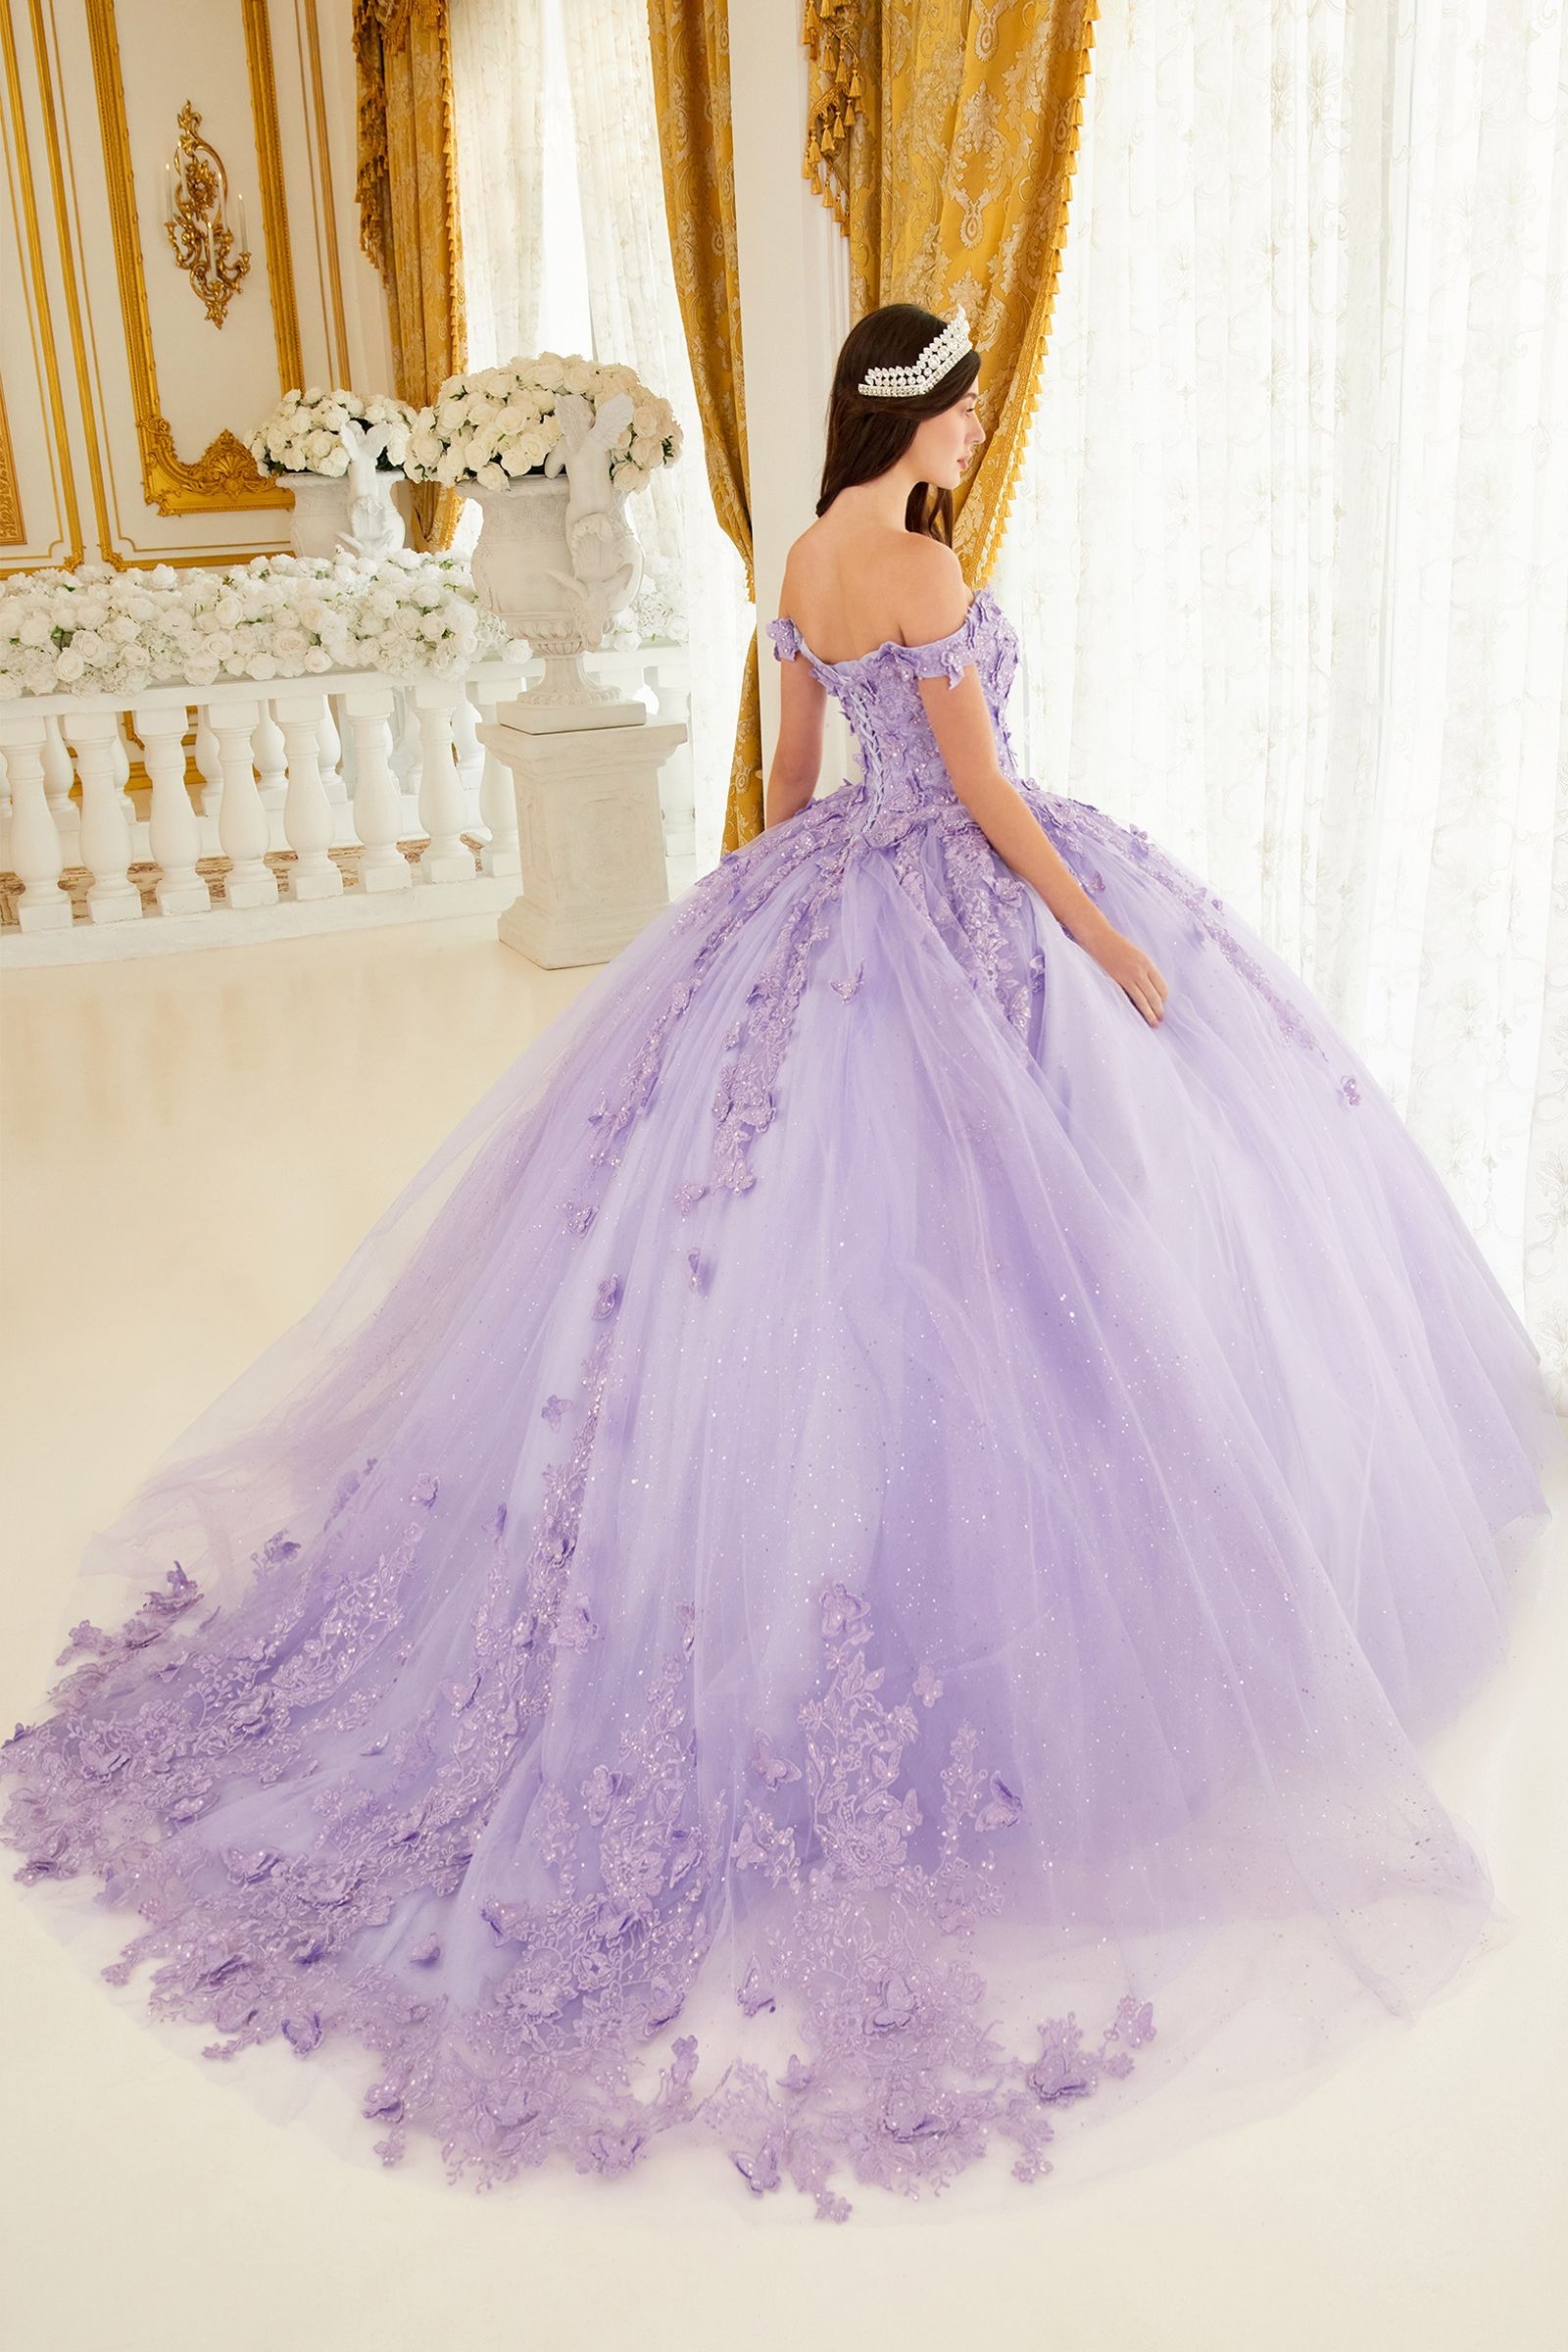 Ariana Grande Black Ball Gown Celebrity Prom Dress Time 100 Gala